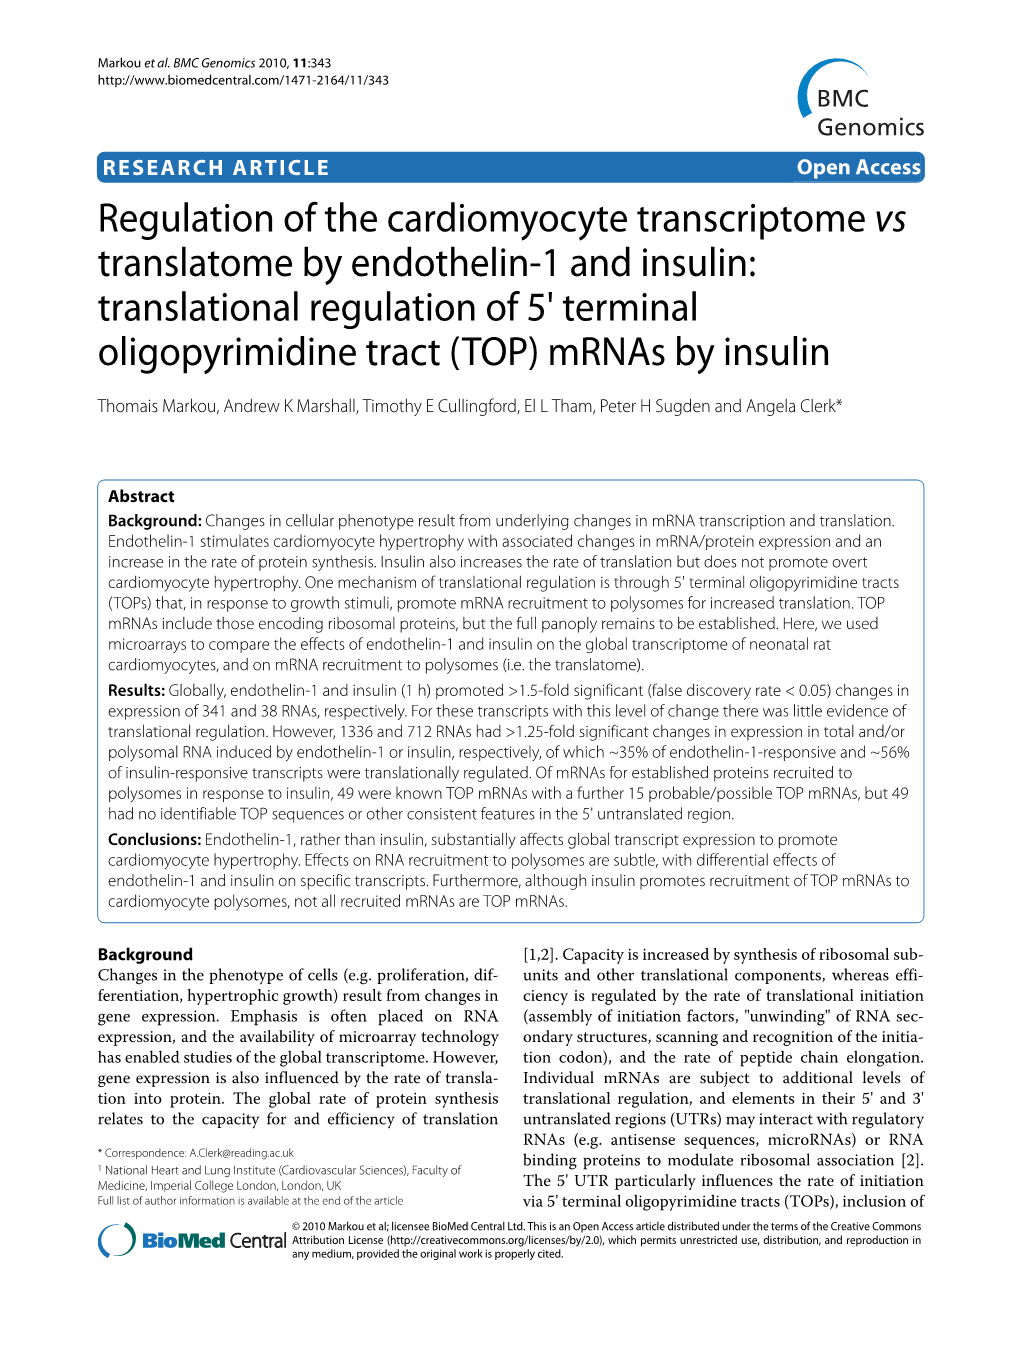 Translational Regulation of 5' Terminal Oligopyrimidine Tract (TOP) Mrnas by Insulin